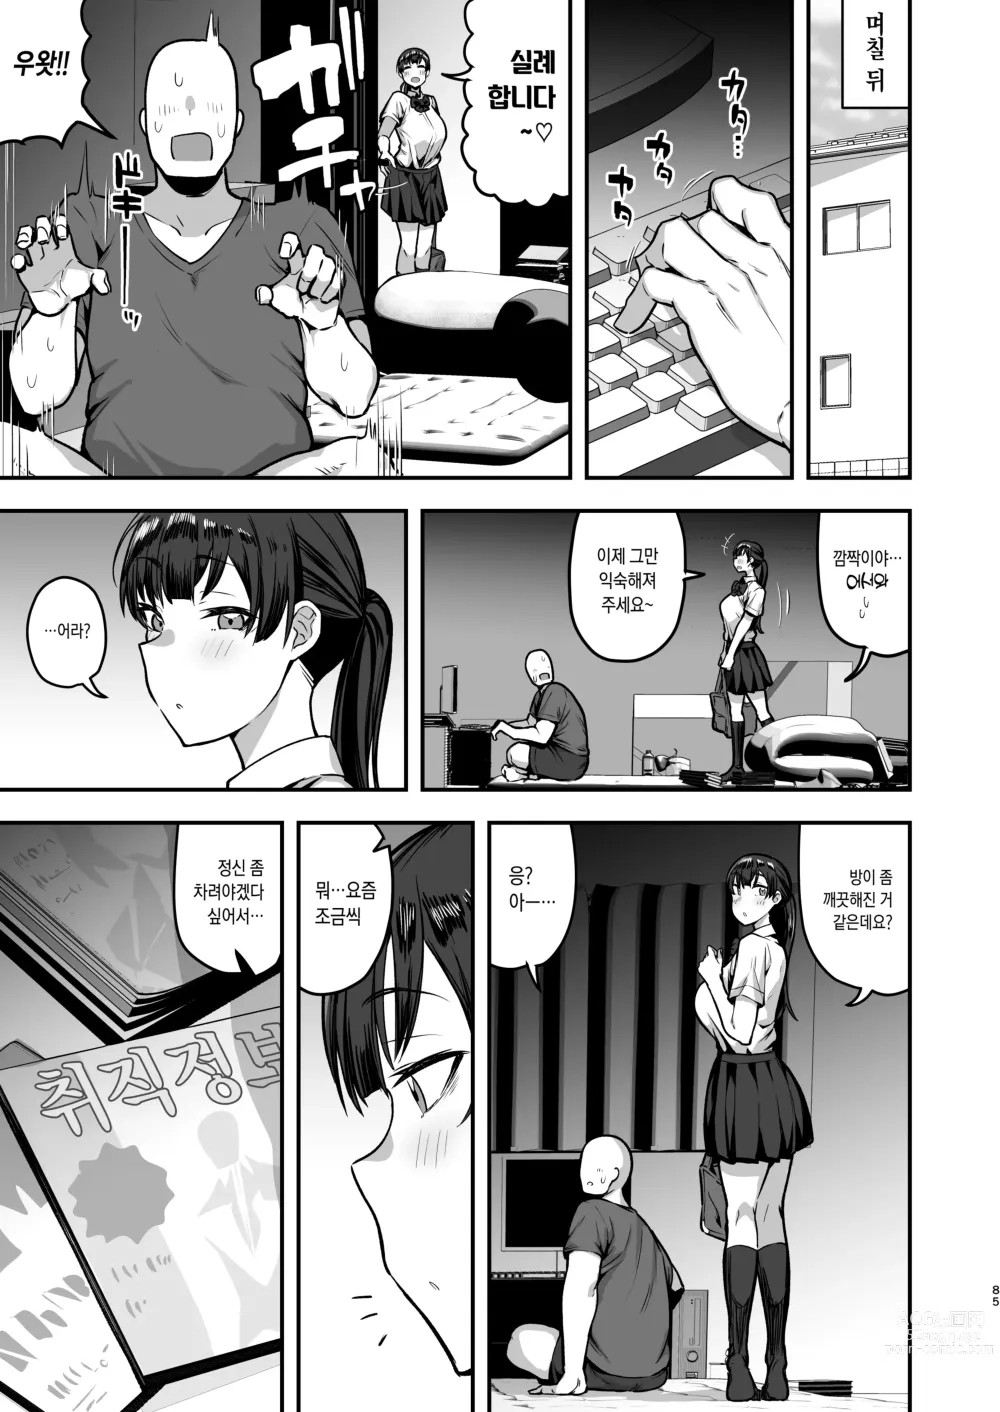 Page 85 of doujinshi 여동생의 친구가 너무 개변태 체취 페티라서, 찐따인 나랑 위험한 날 질싸 섹스 존나 함 (decensored)